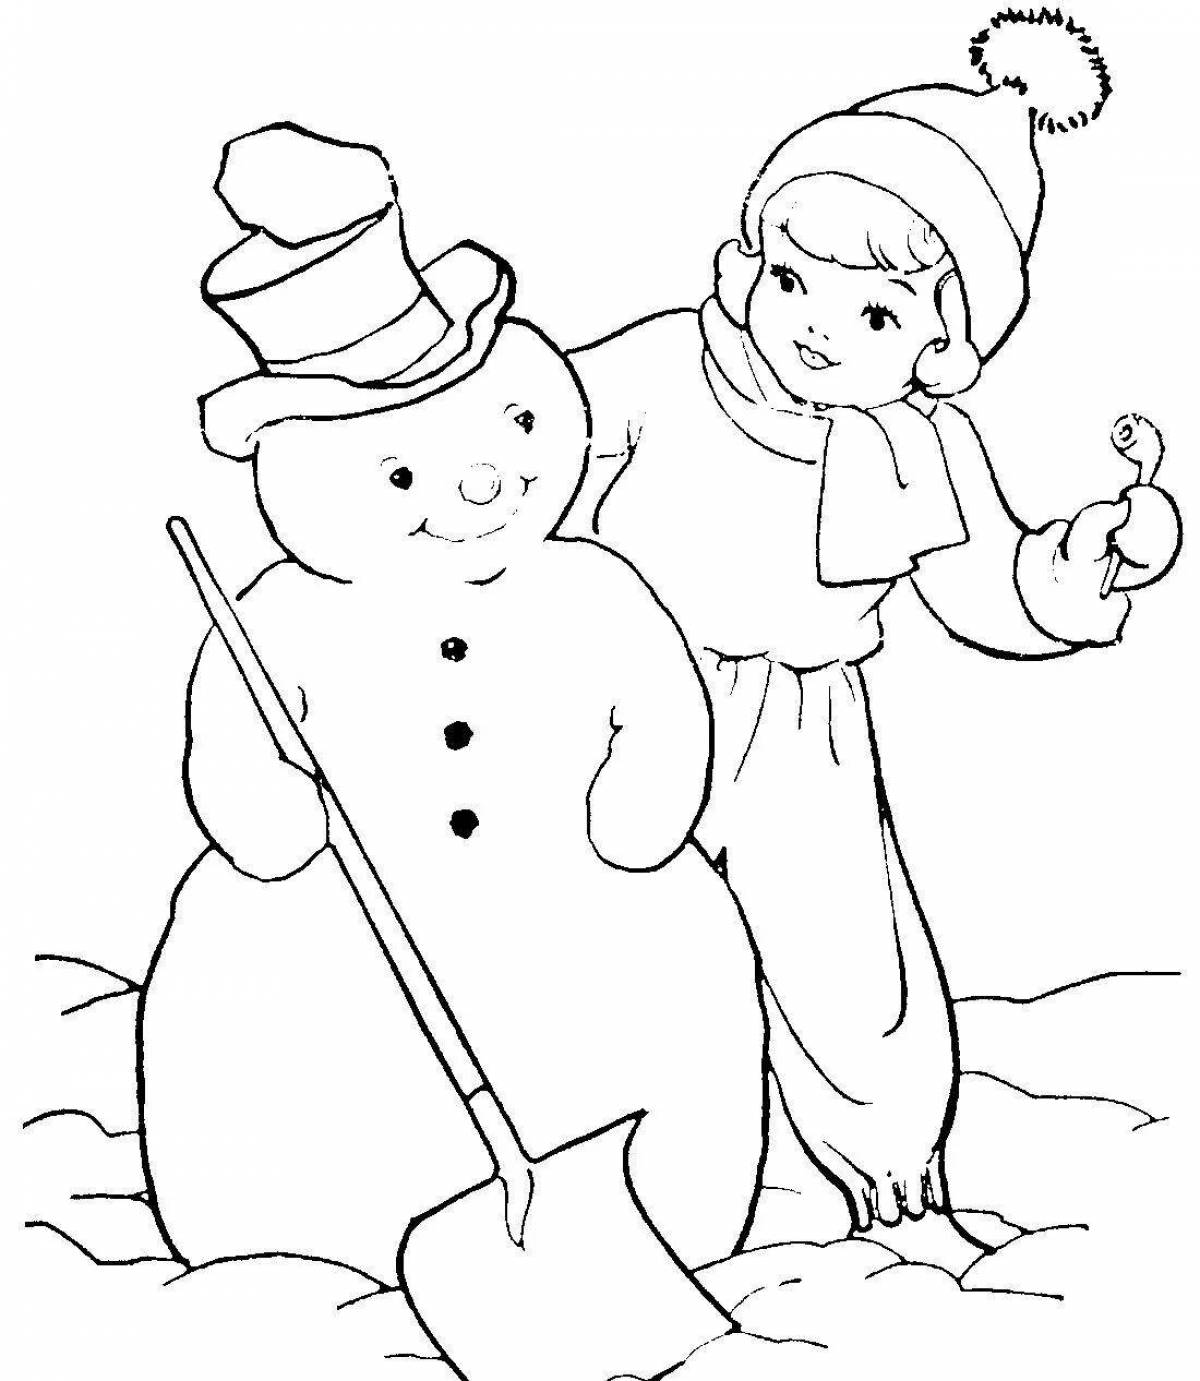 Coloring book zany snowman simulation